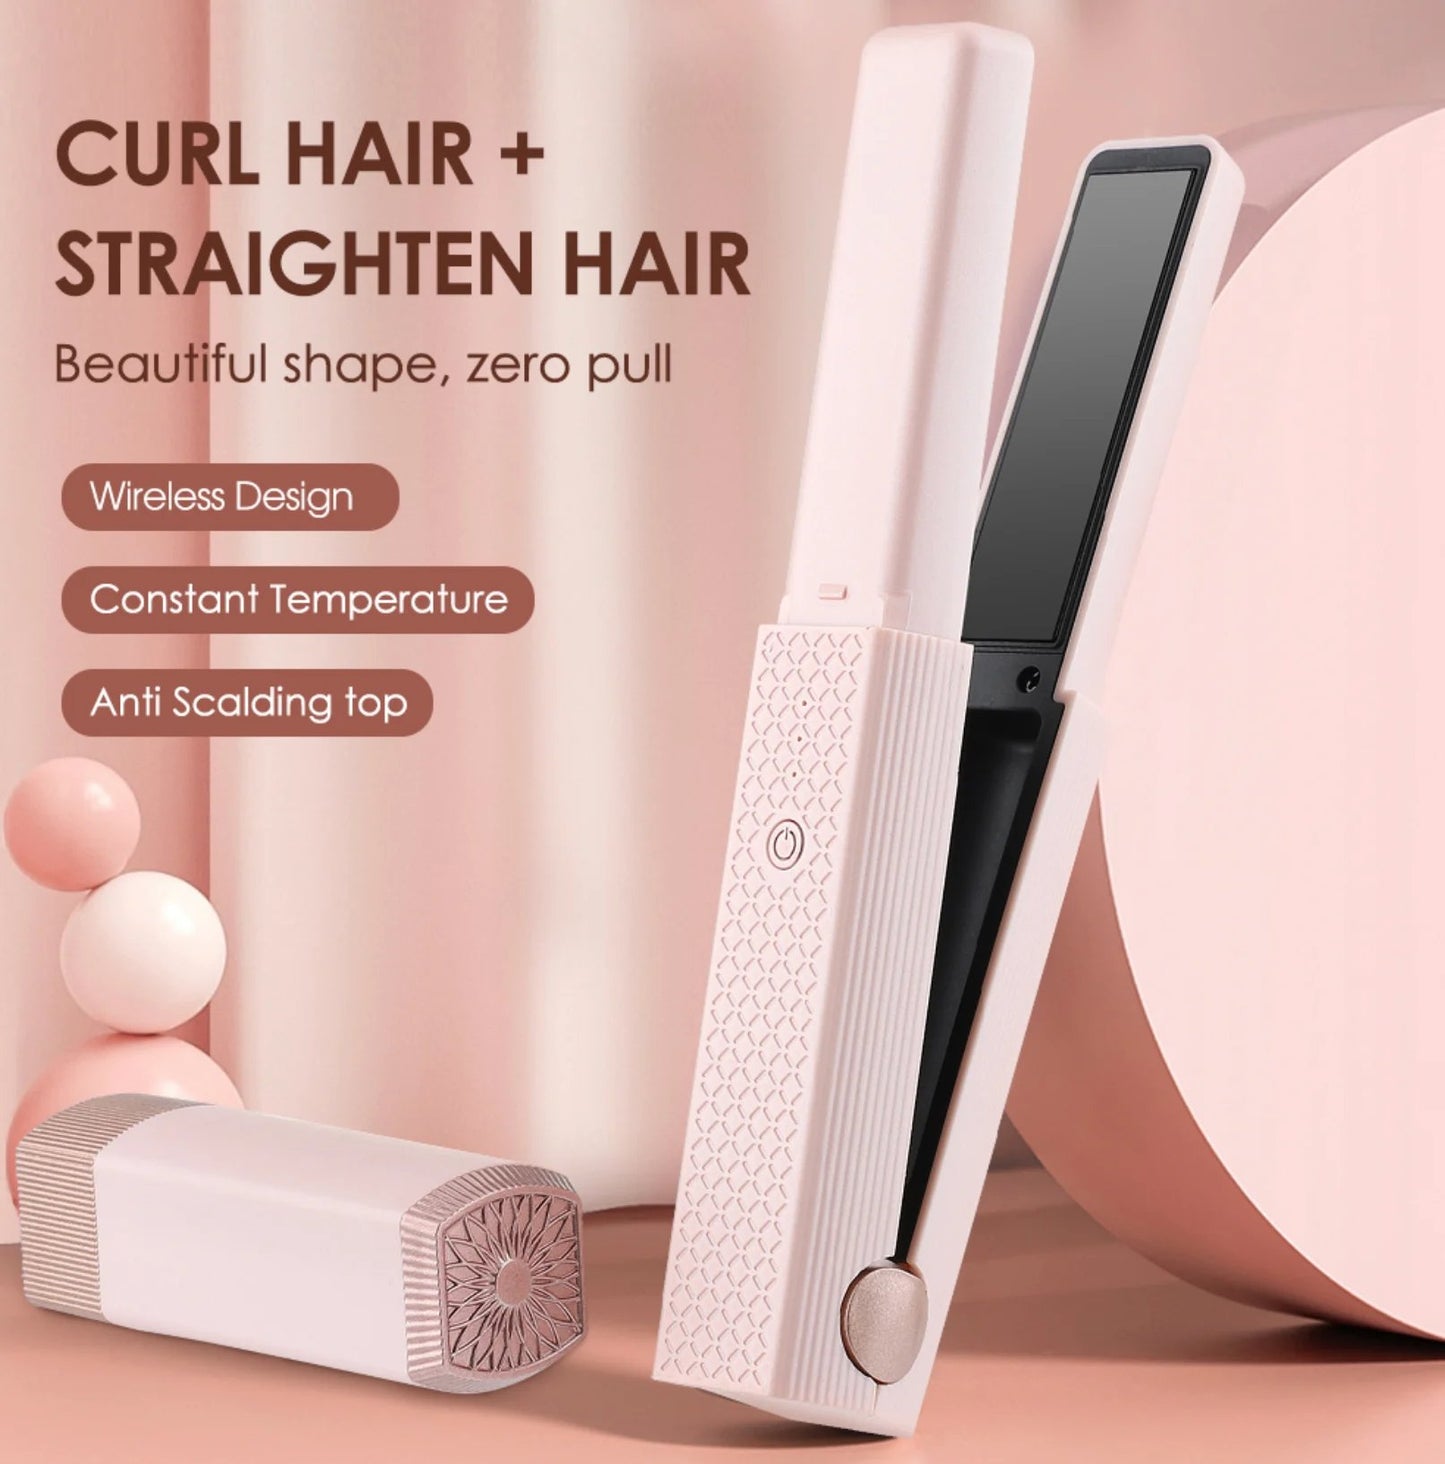 🔥Hot Sale Promotion 52% OFF - Portable Non-Destructive Hair Straightener